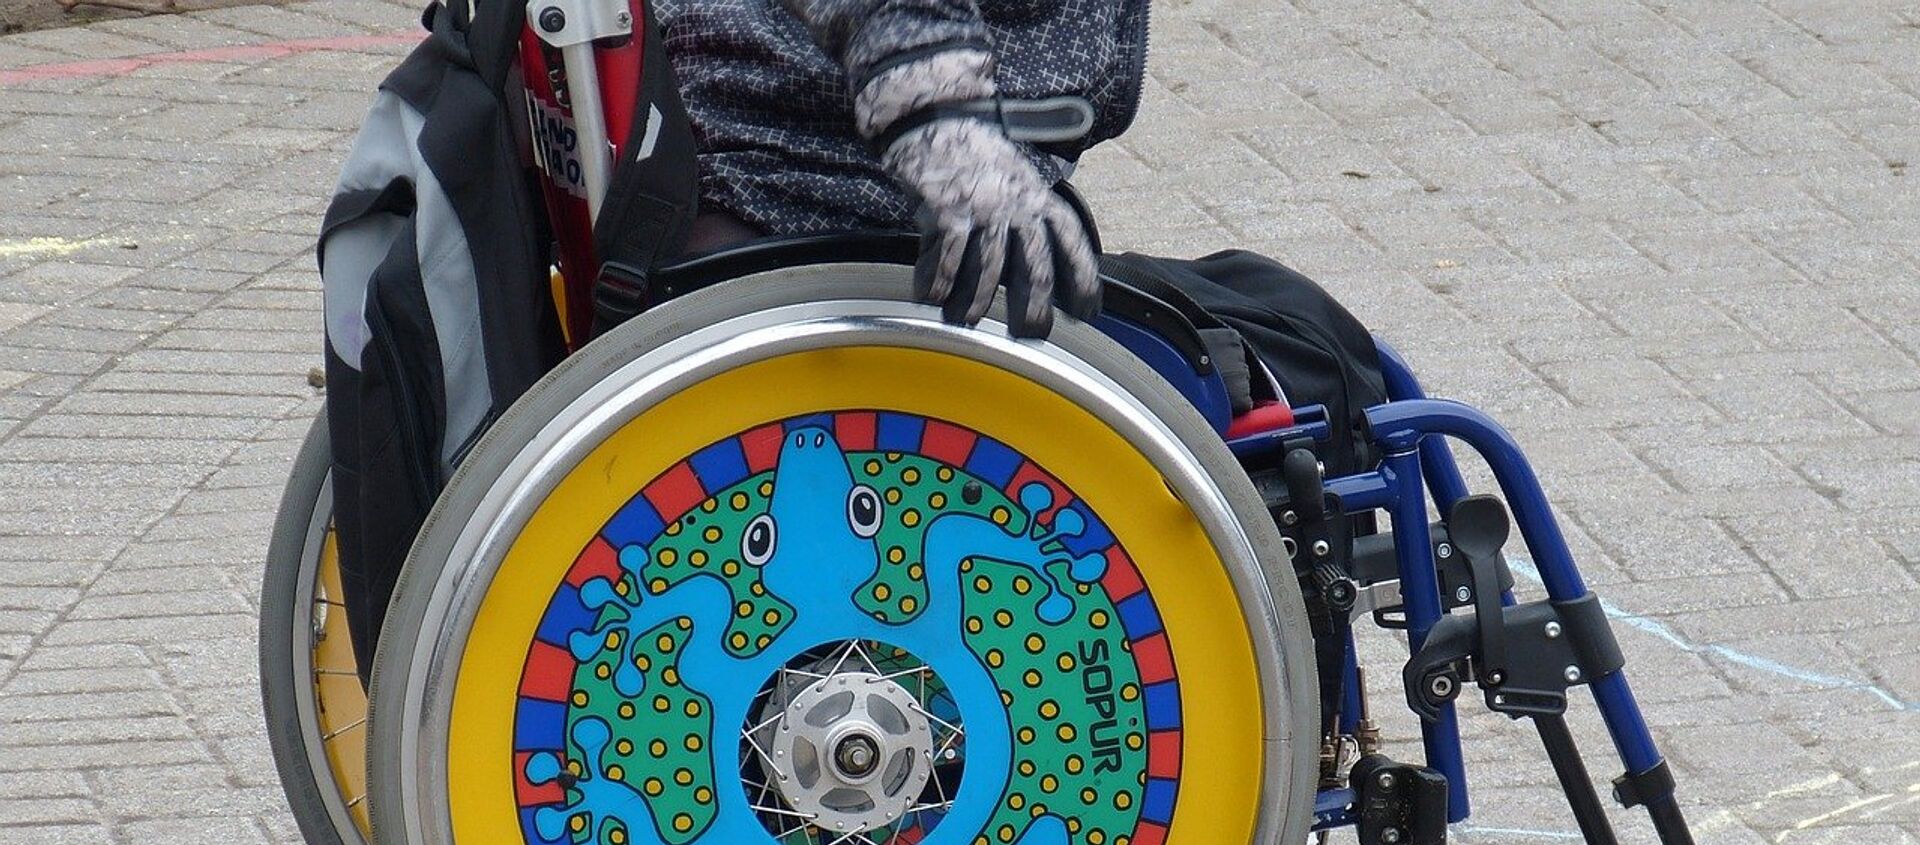 Una persona discapacitada - Sputnik Mundo, 1920, 03.12.2017